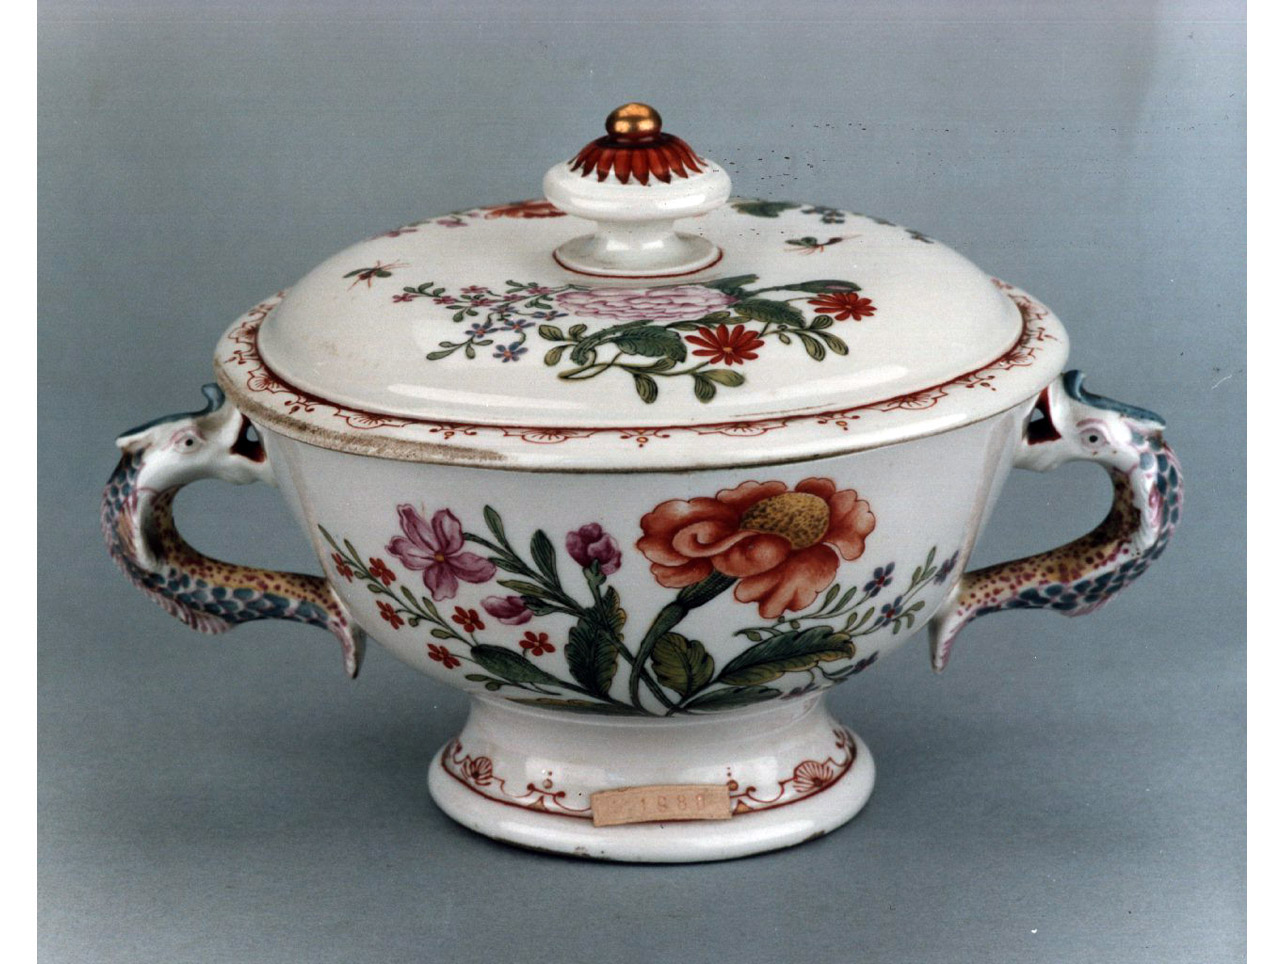 motivi decorativi floreali (tazza) - manifattura Du Paquier (sec. XVIII)